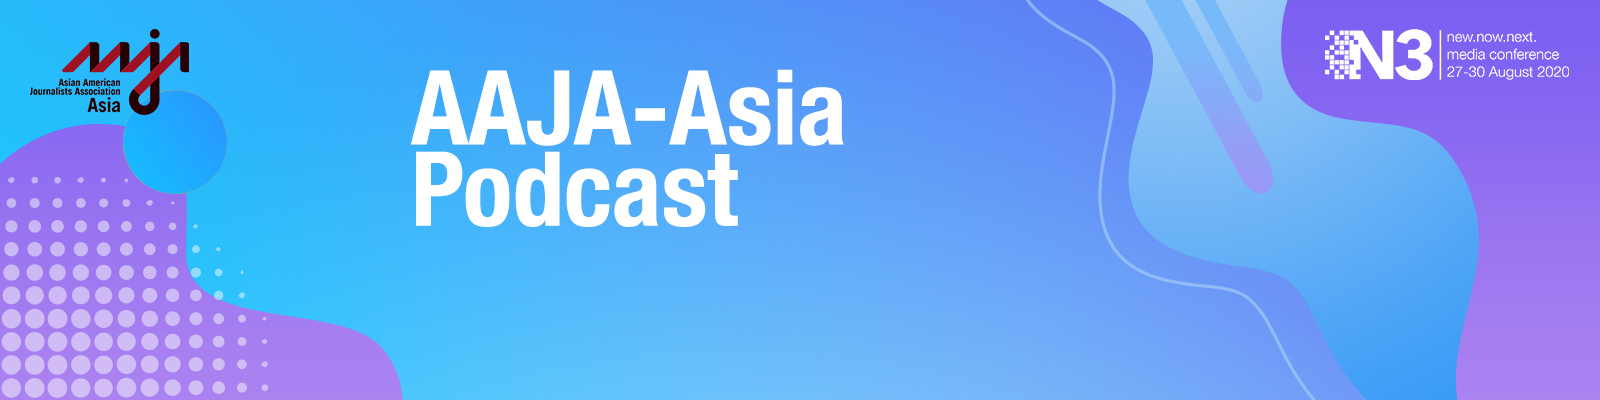 AAJA-Asia Podcast